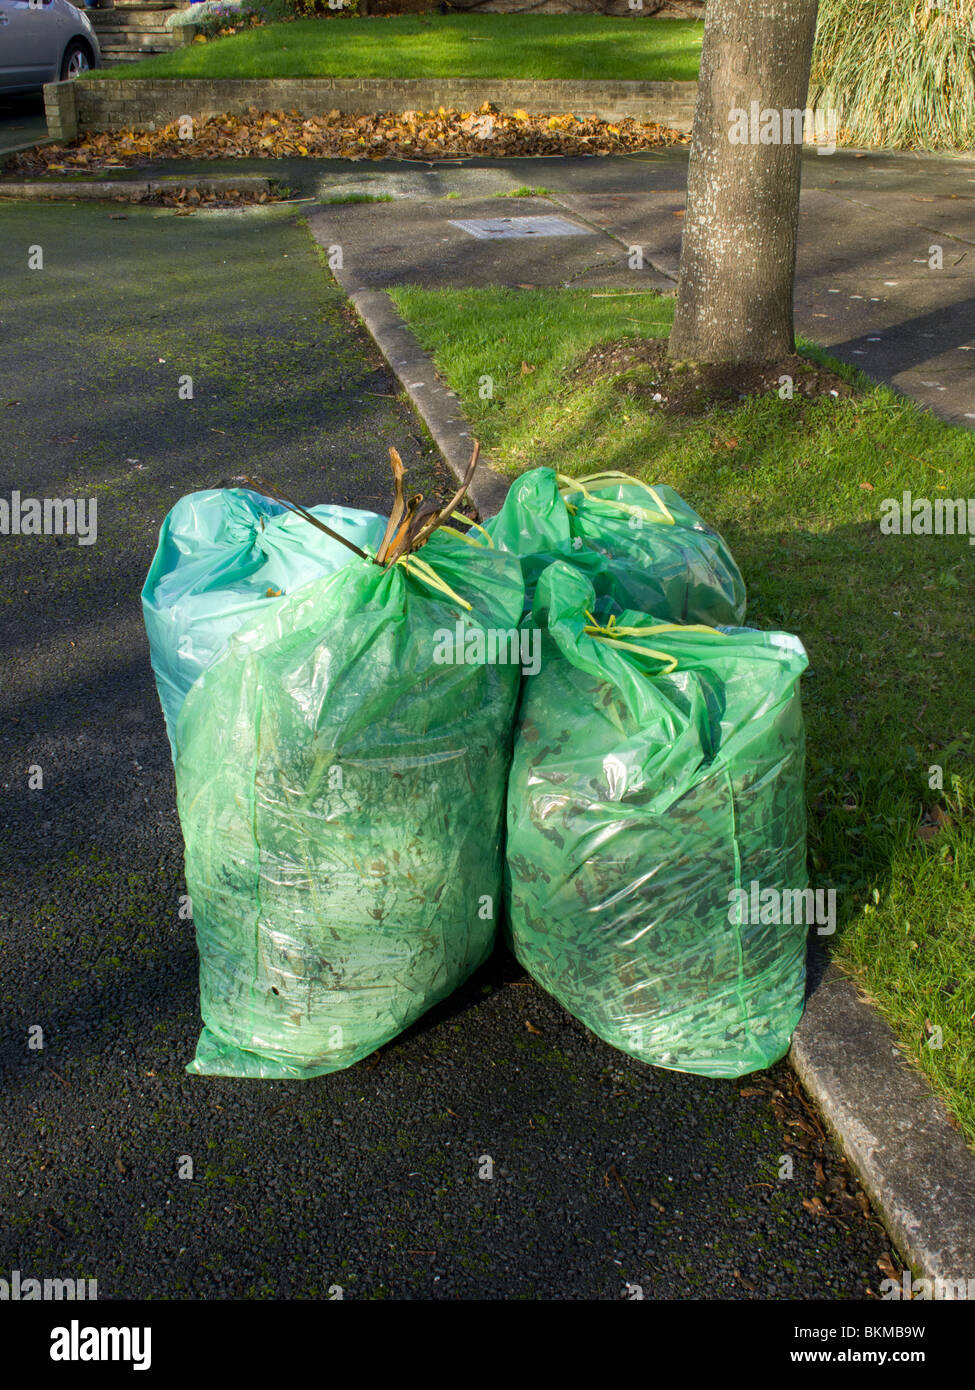 https://c8.alamy.com/comp/BKMB9W/three-green-plastic-bags-of-recyclable-garden-waste-BKMB9W.jpg